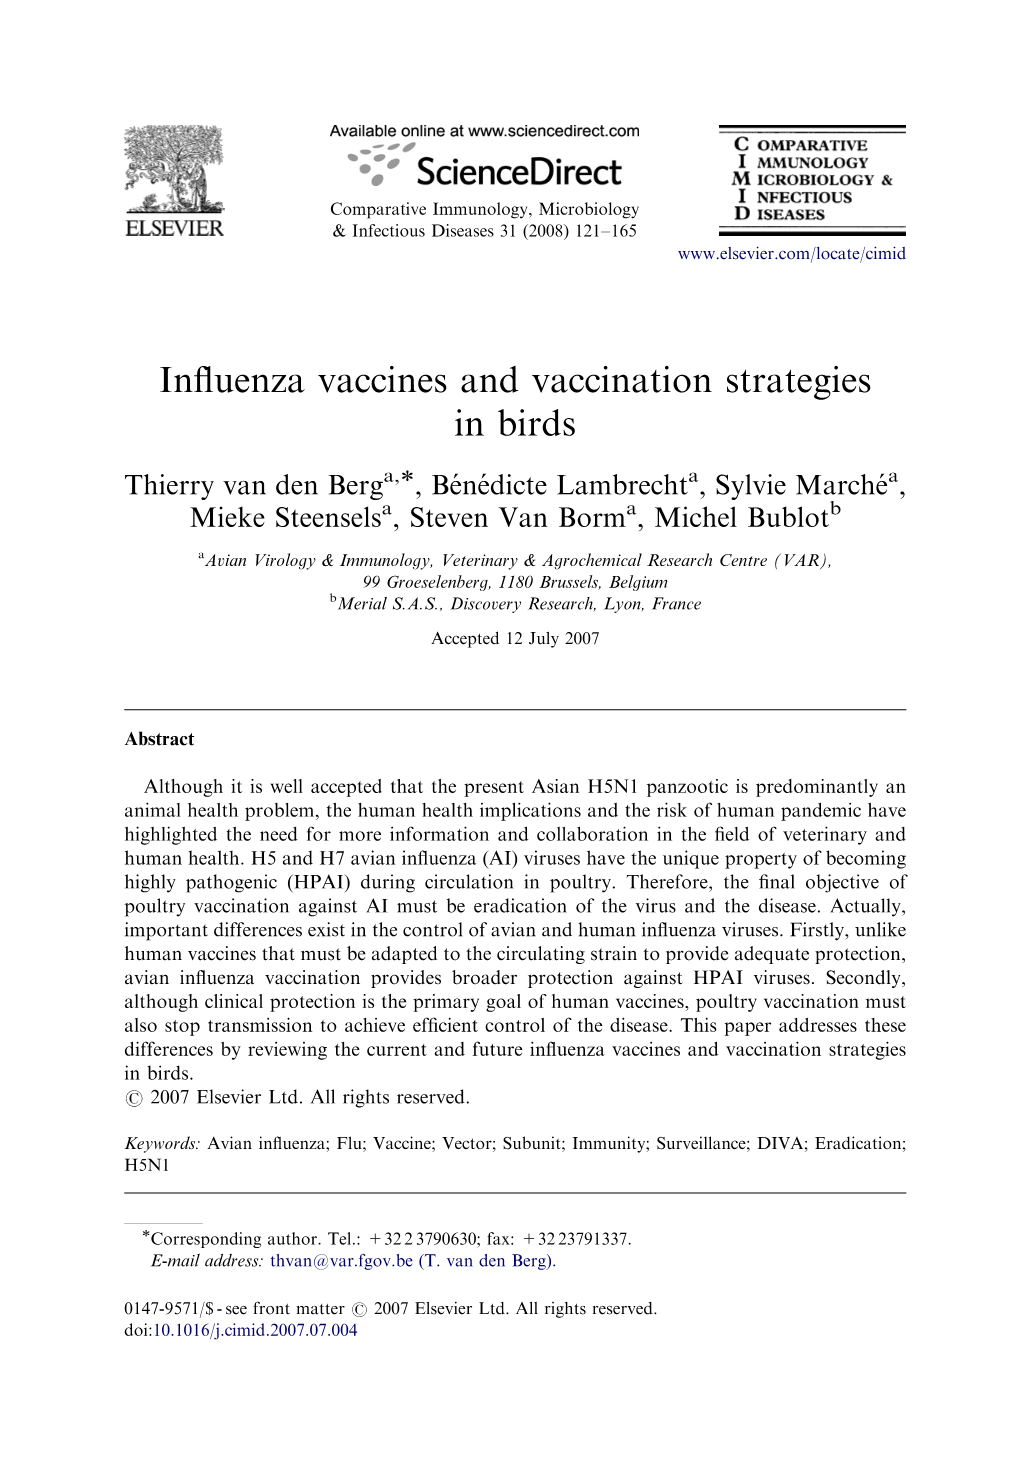 Influenza Vaccines and Vaccination Strategies in Birds